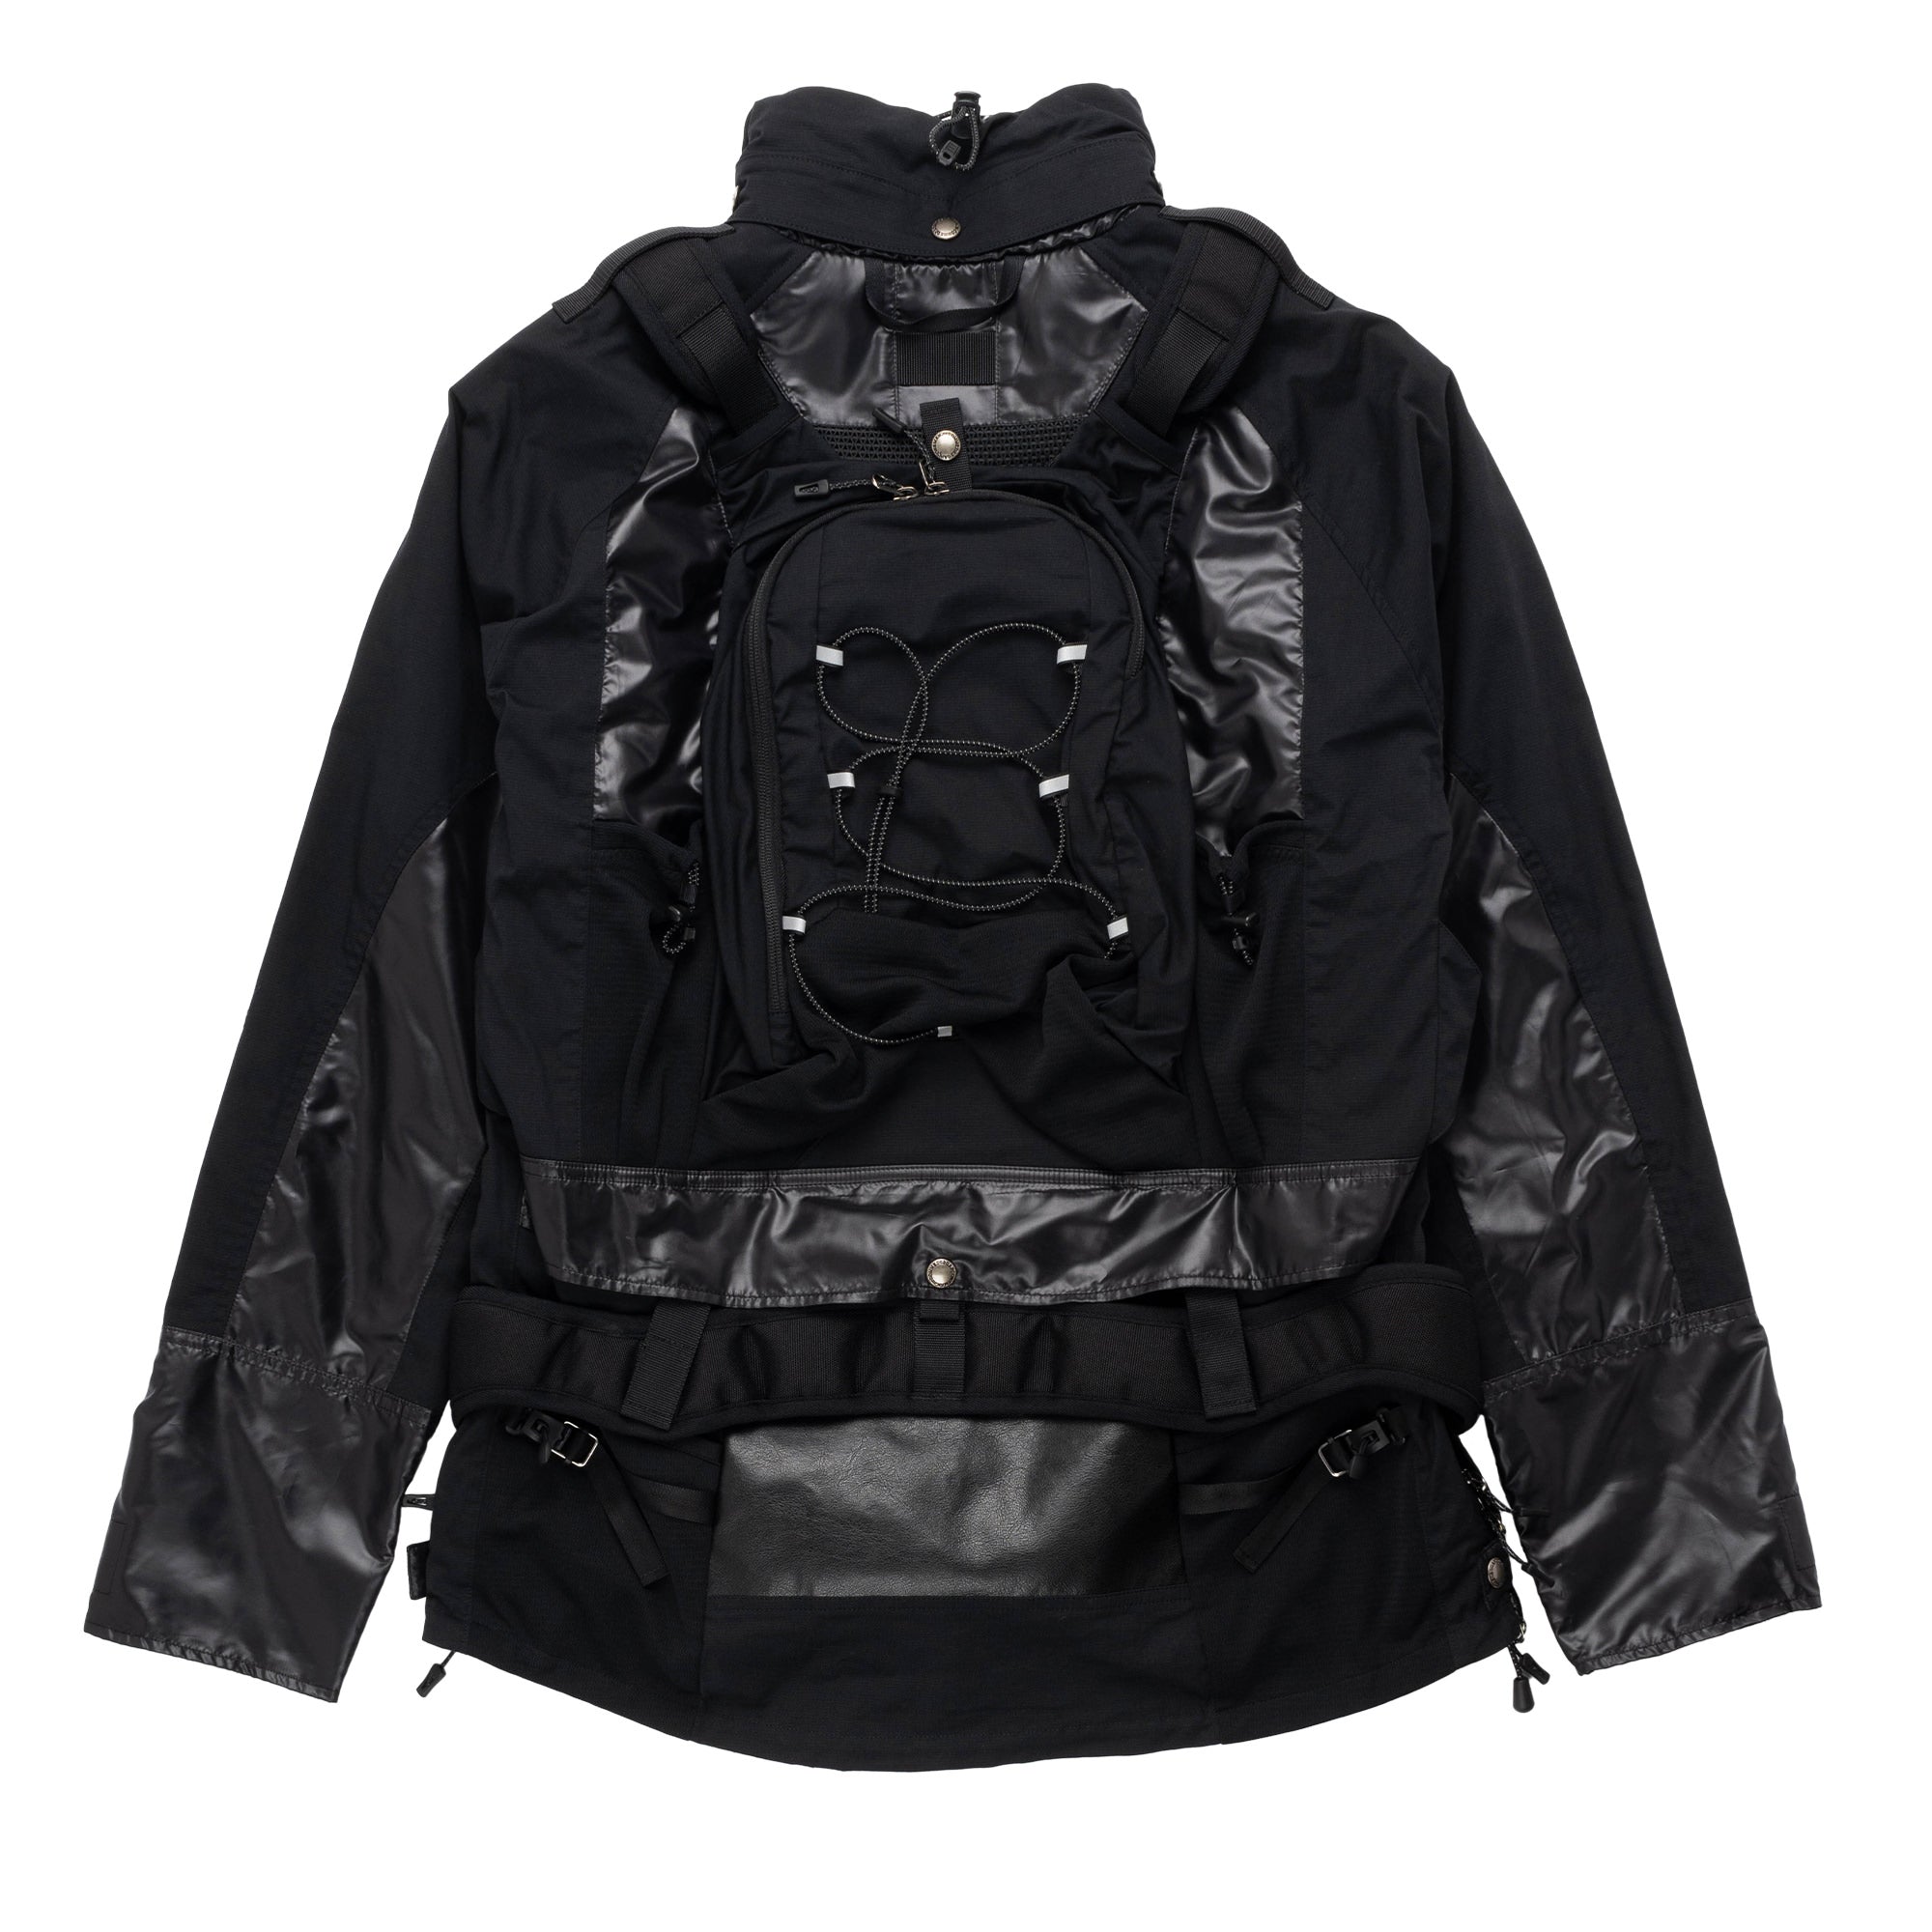 Kalligraphy motif hoodie Utility Backpack Jacket GMP01134 WL-J014-051-1 Black